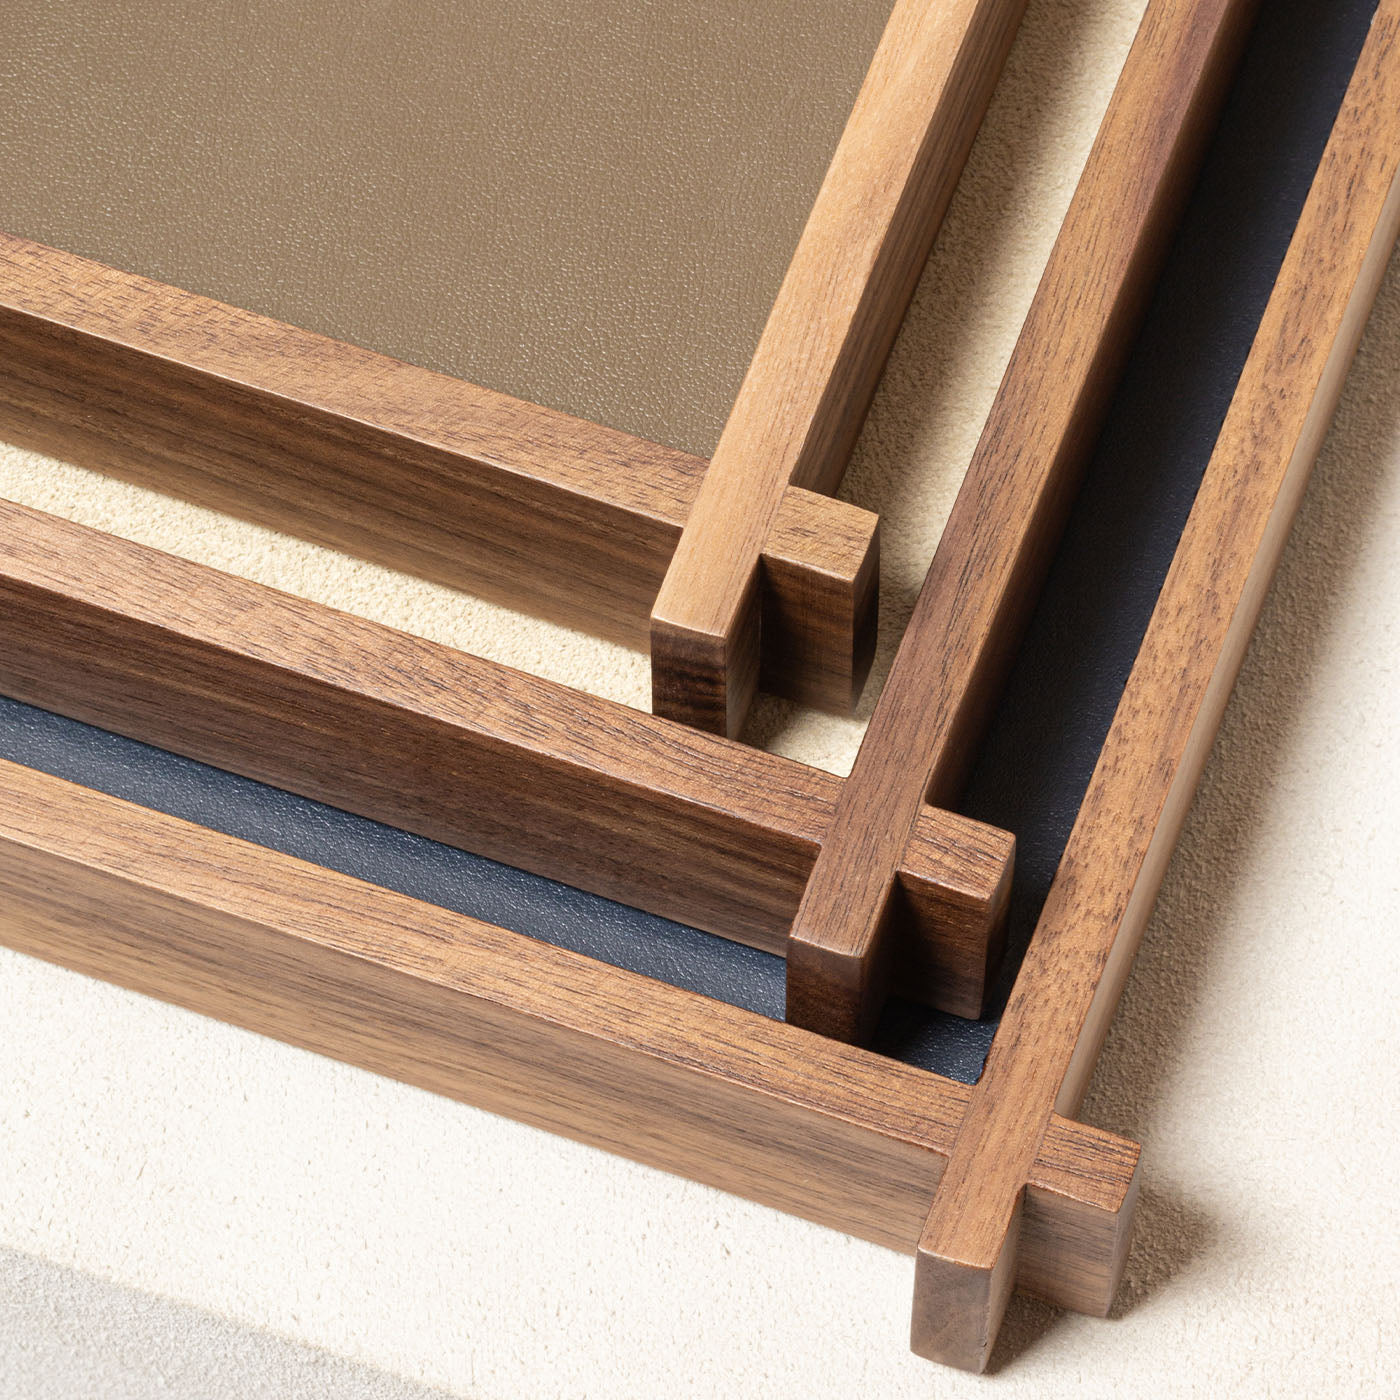 Structura Leather & Wood Long Rectangular Valet Tray Medium #1 - Alternative view 2